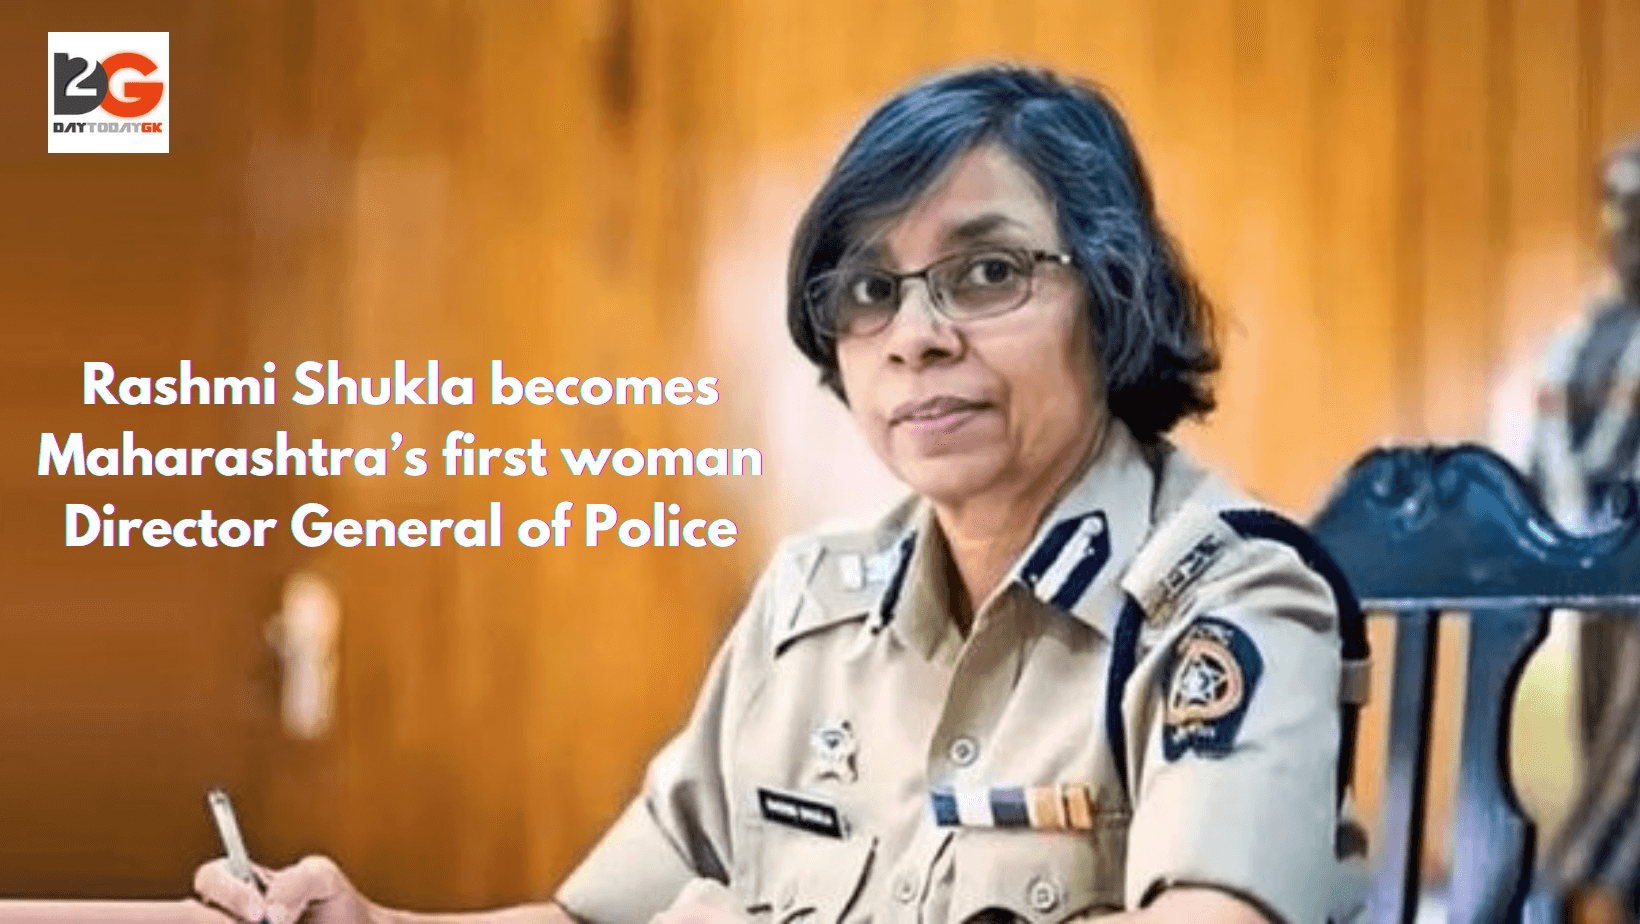 Rashmi Shukla becomes Maharashtra’s first woman Director General of Police